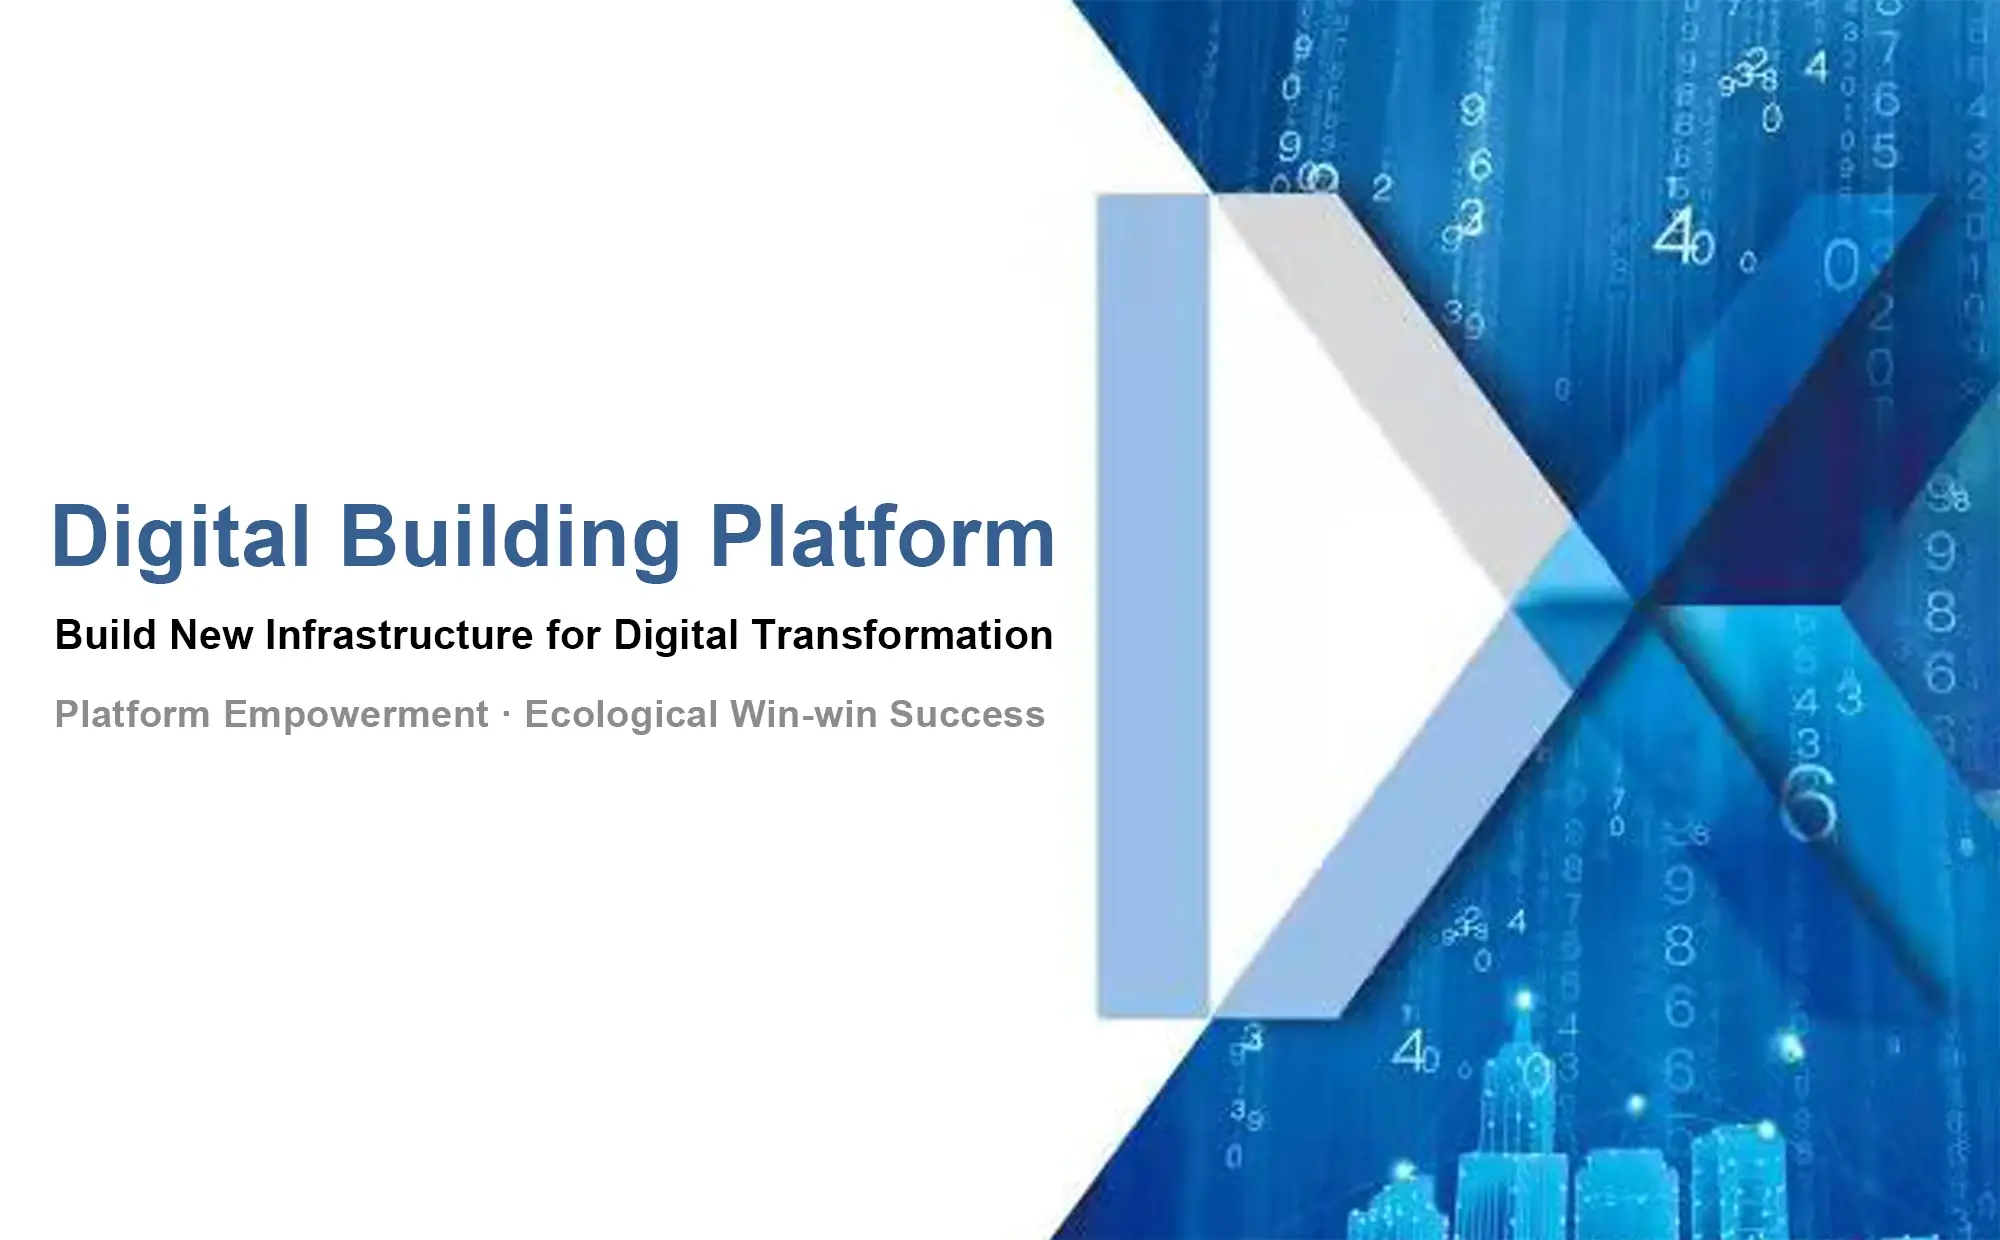 Digital Building Platform White Paper-Compact Edition